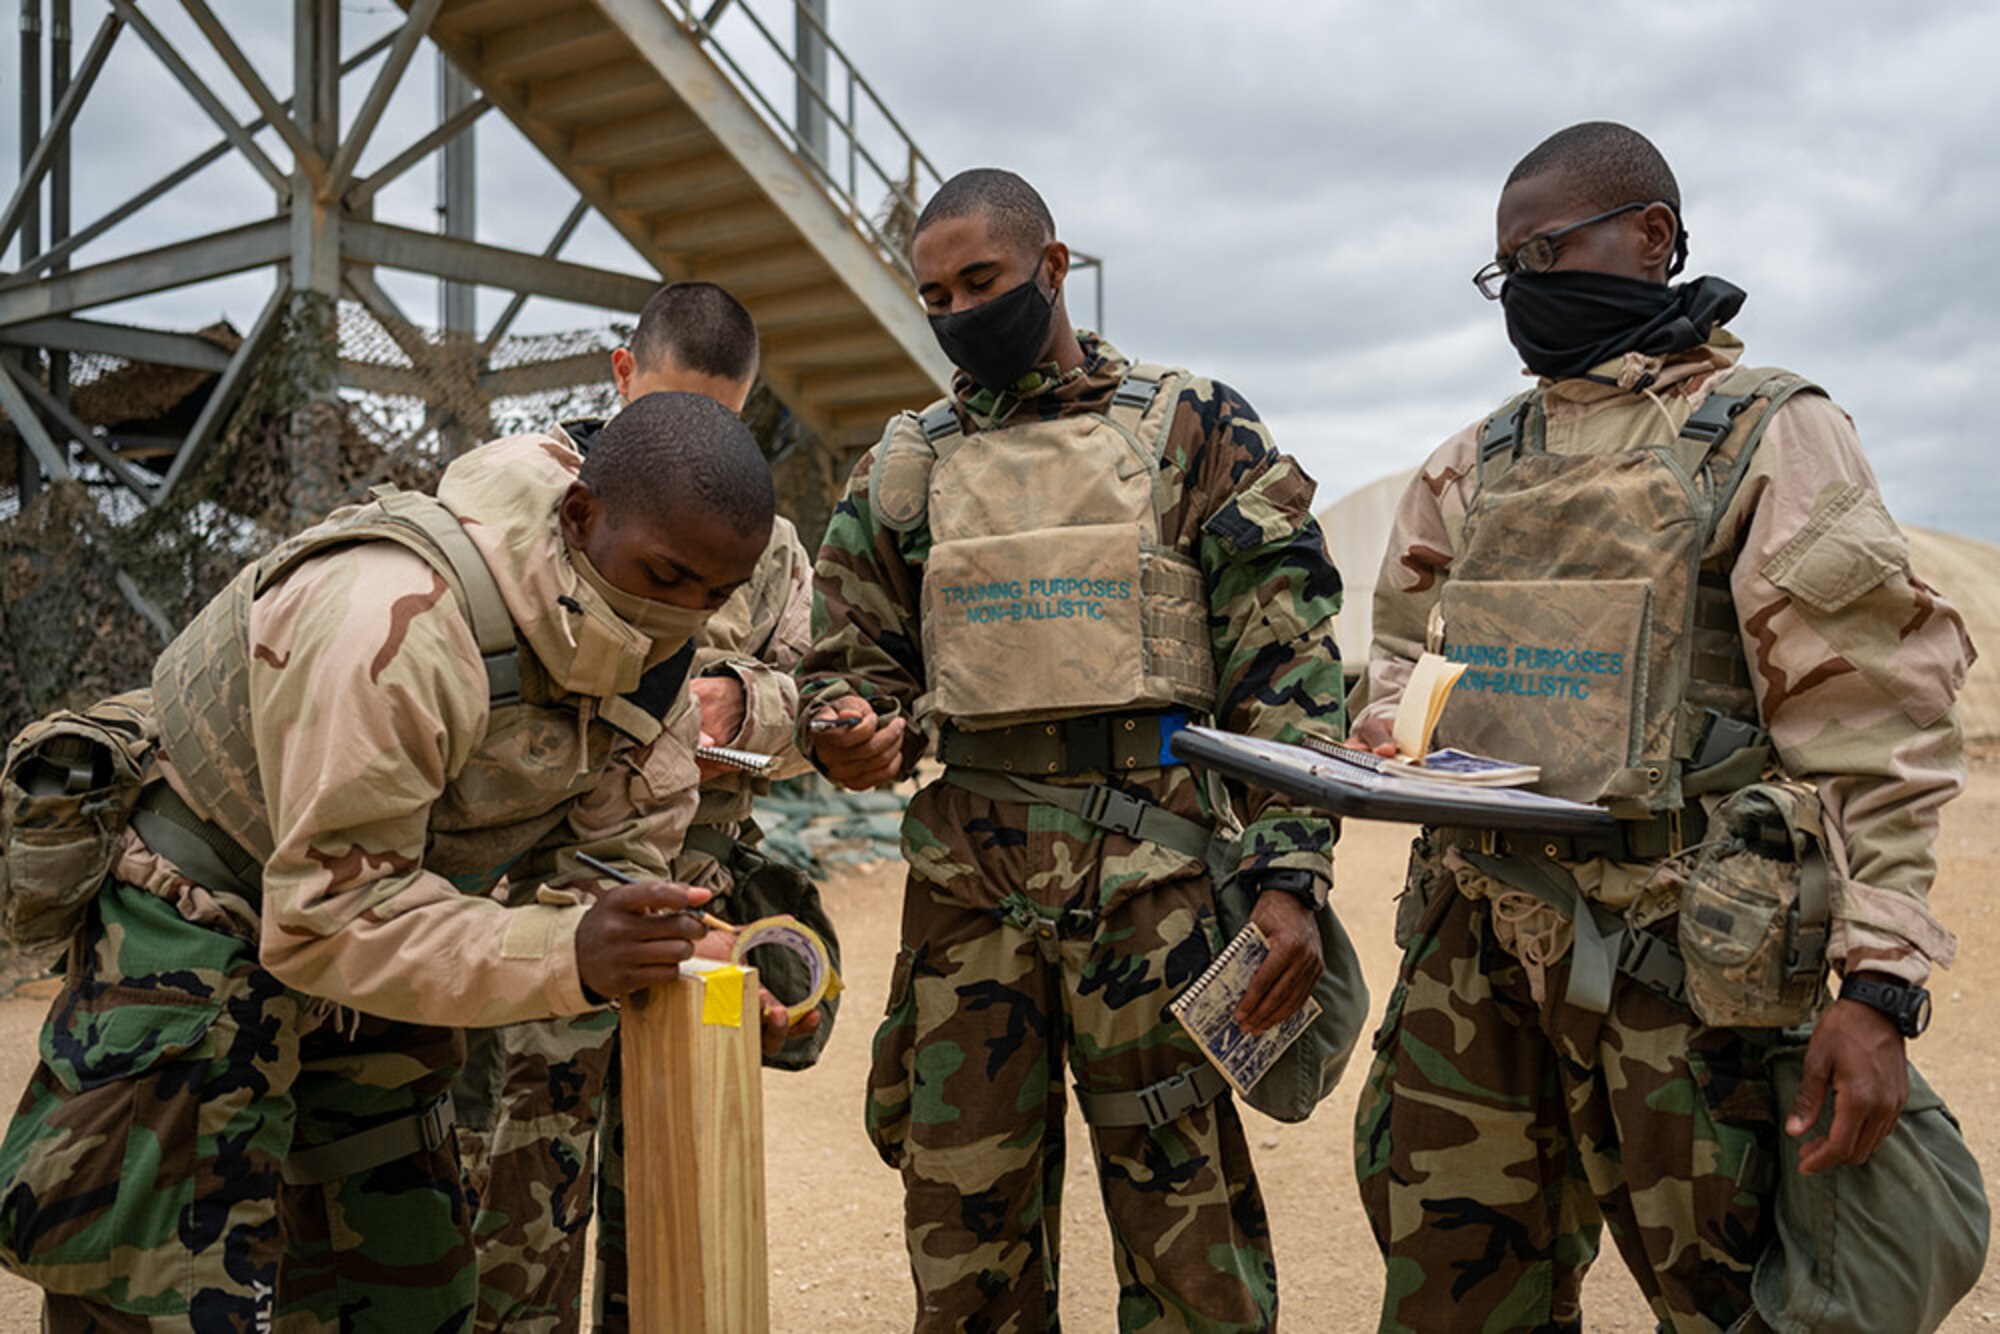 Trainees take part in CBRN Defense training.